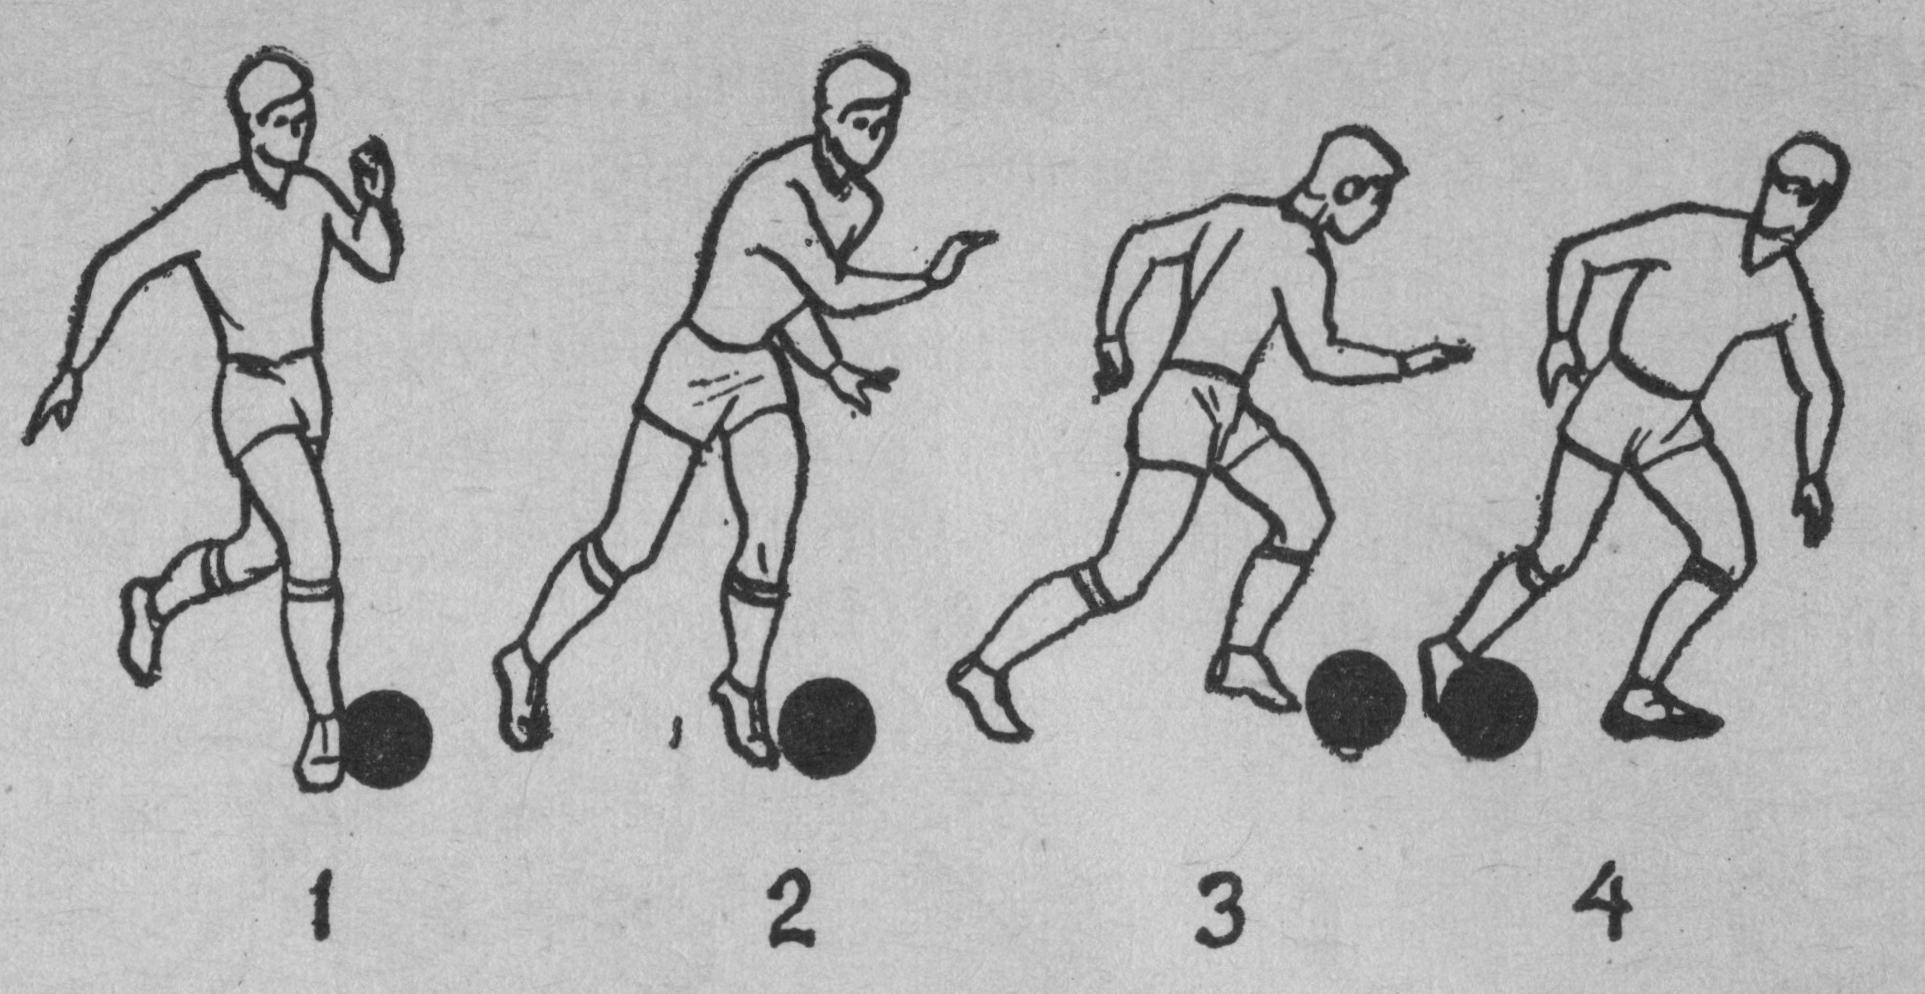 Футбол ввод мяча. Ведение мяча ногой в футболе. Техники ведения мяча ногой в футболе. Приемы ведения мяча в футболе. Упражнения на технику ведения мяча в футболе.